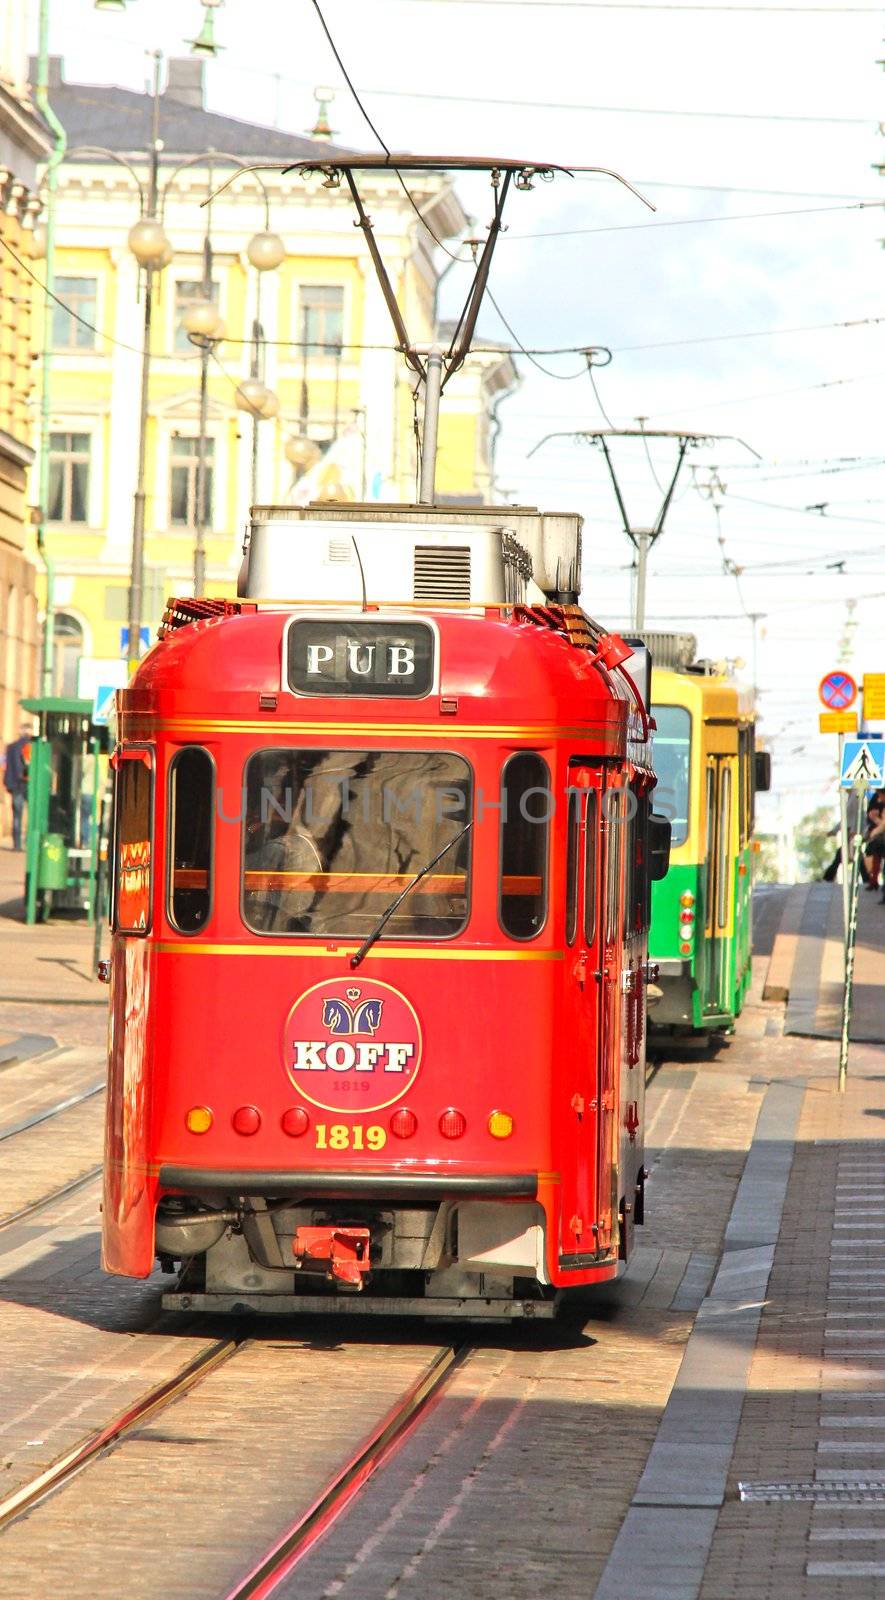 Red pub tram in the capital of Finland, Helsinki